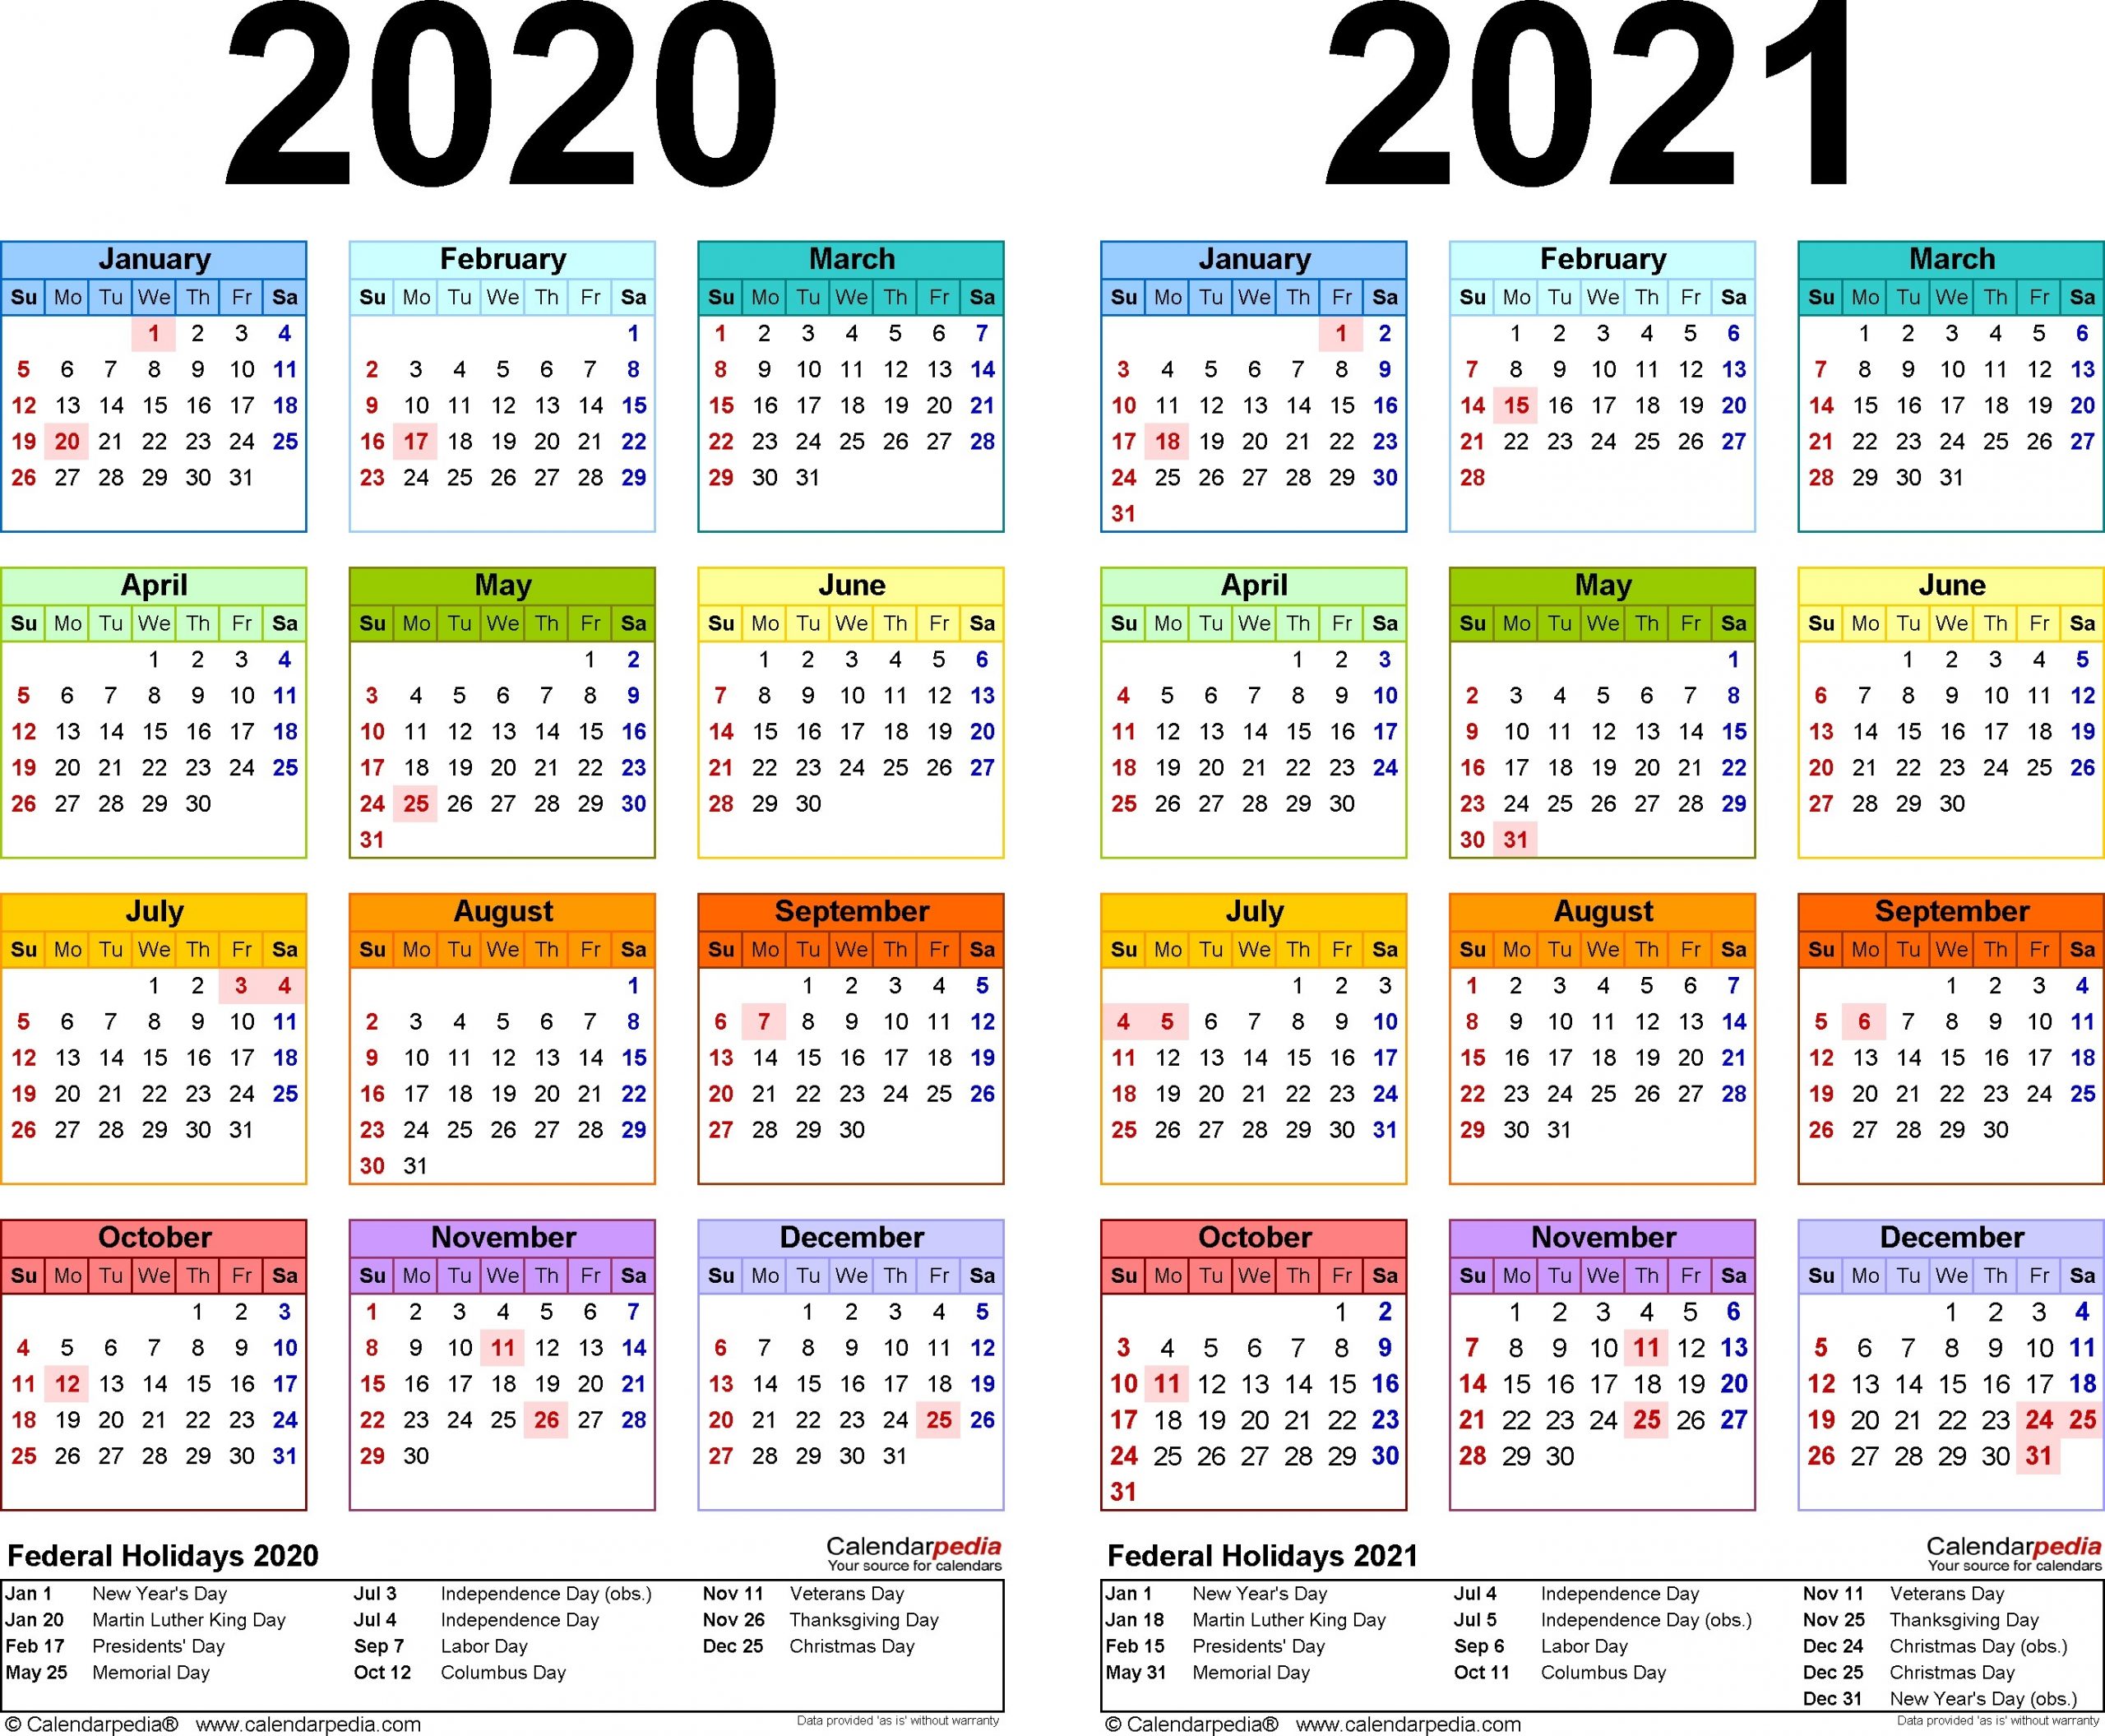 Calendarpedia 2020 Excel | Calendar For Planning  Calendar 18/19 Financial Year Australia